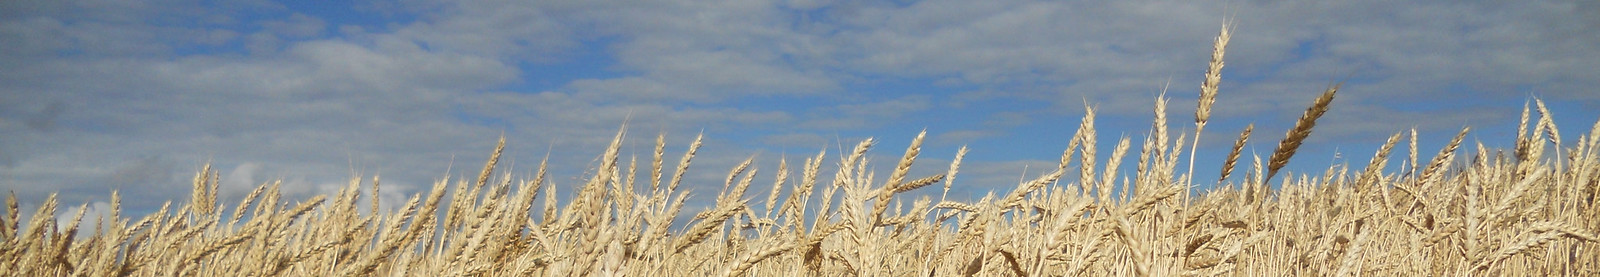 Wheat banner